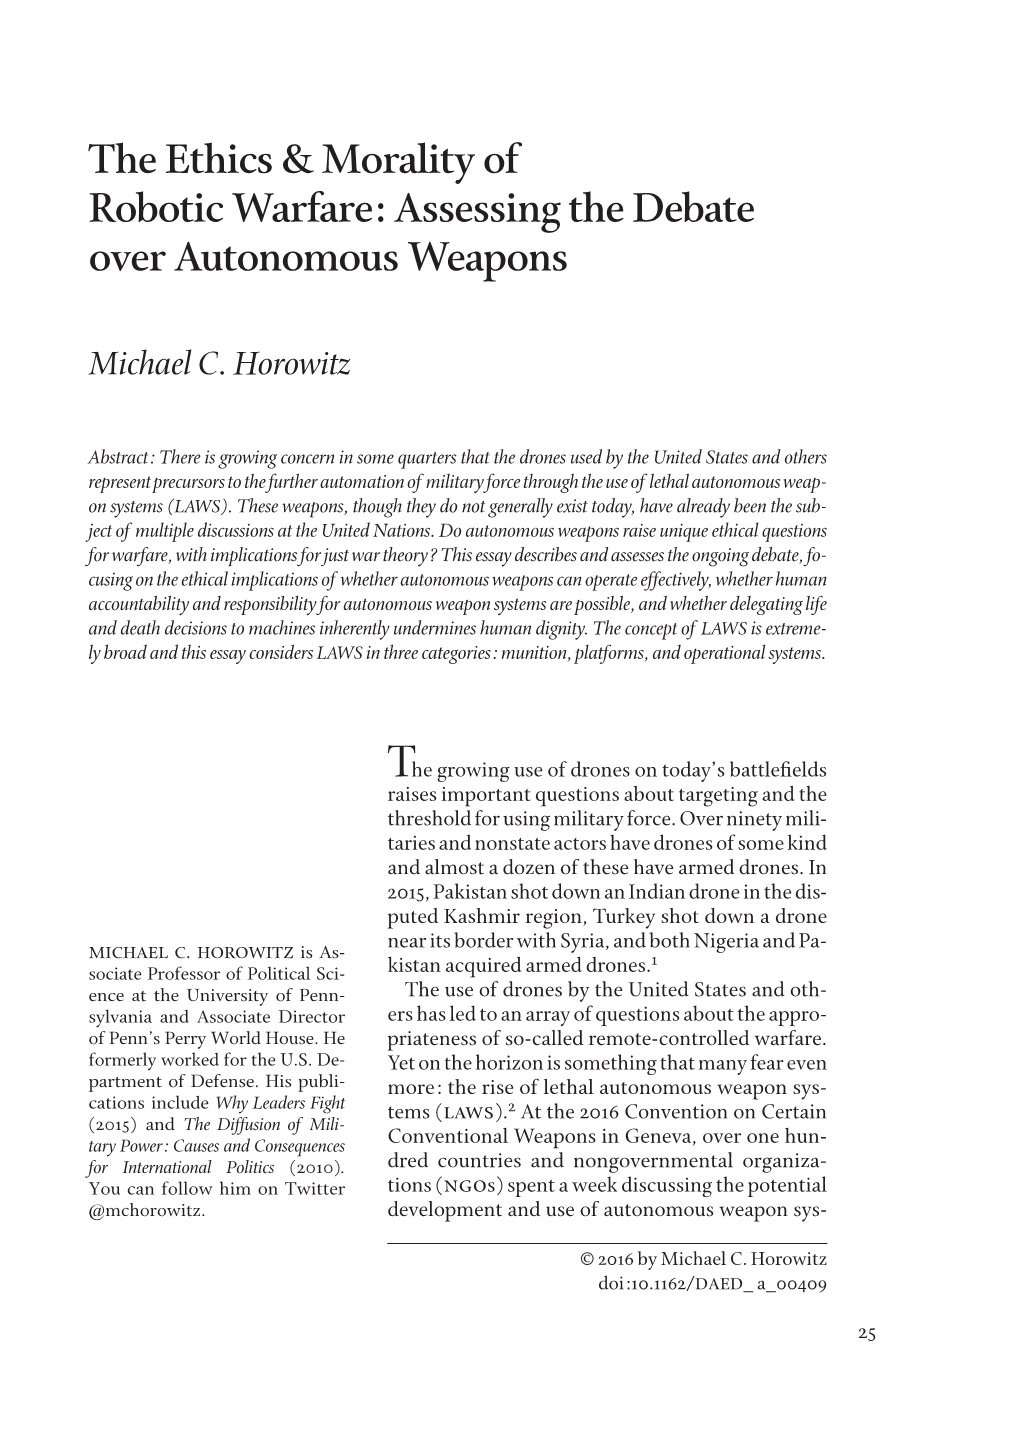 The Ethics & Morality of Robotic Warfare